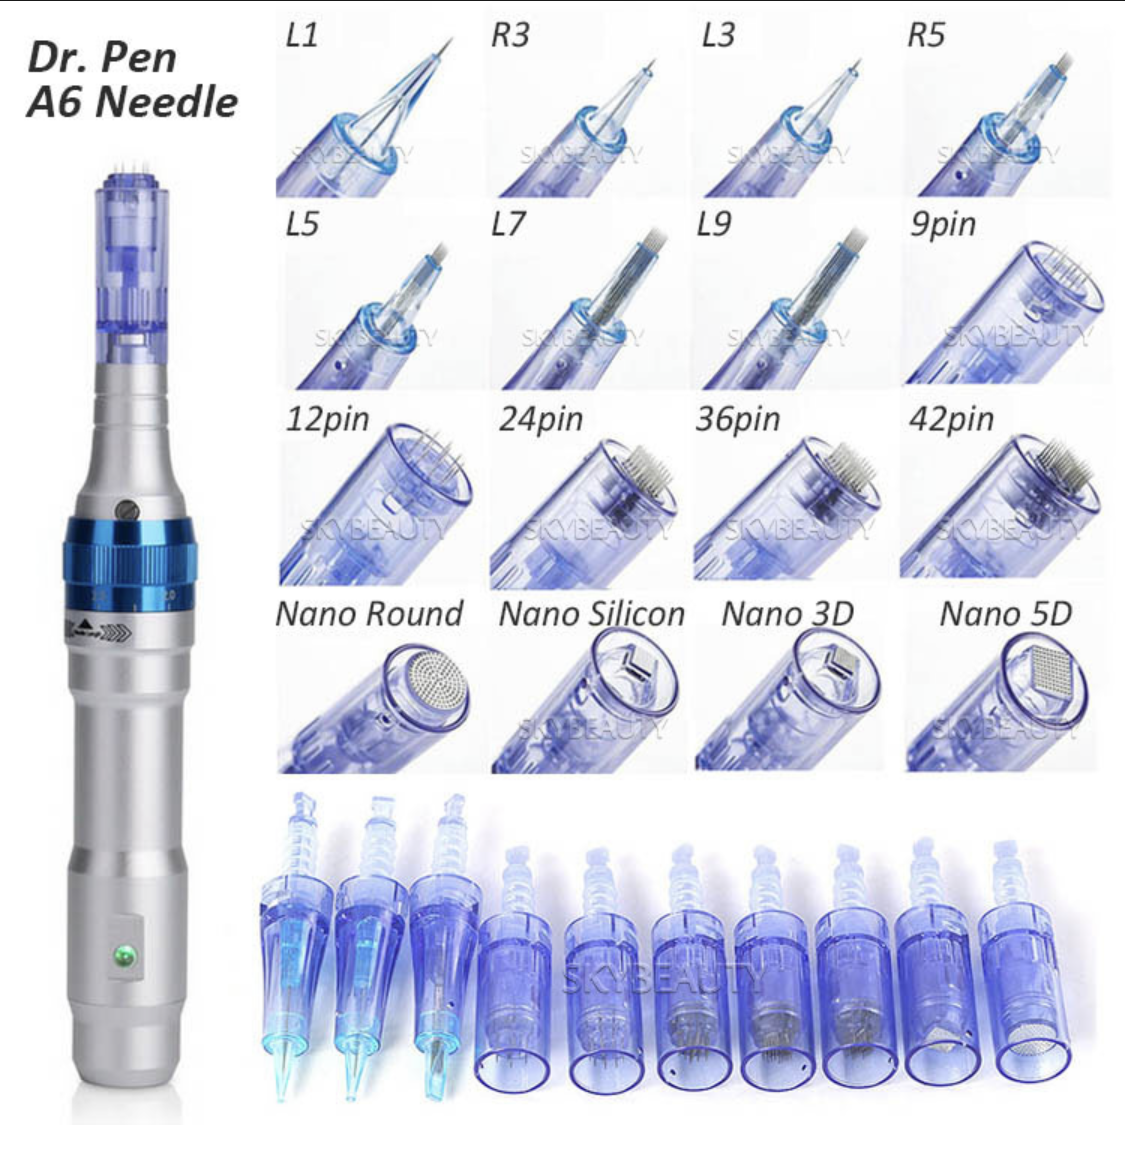 Dr.Pen A1/ A6 needle cartridges